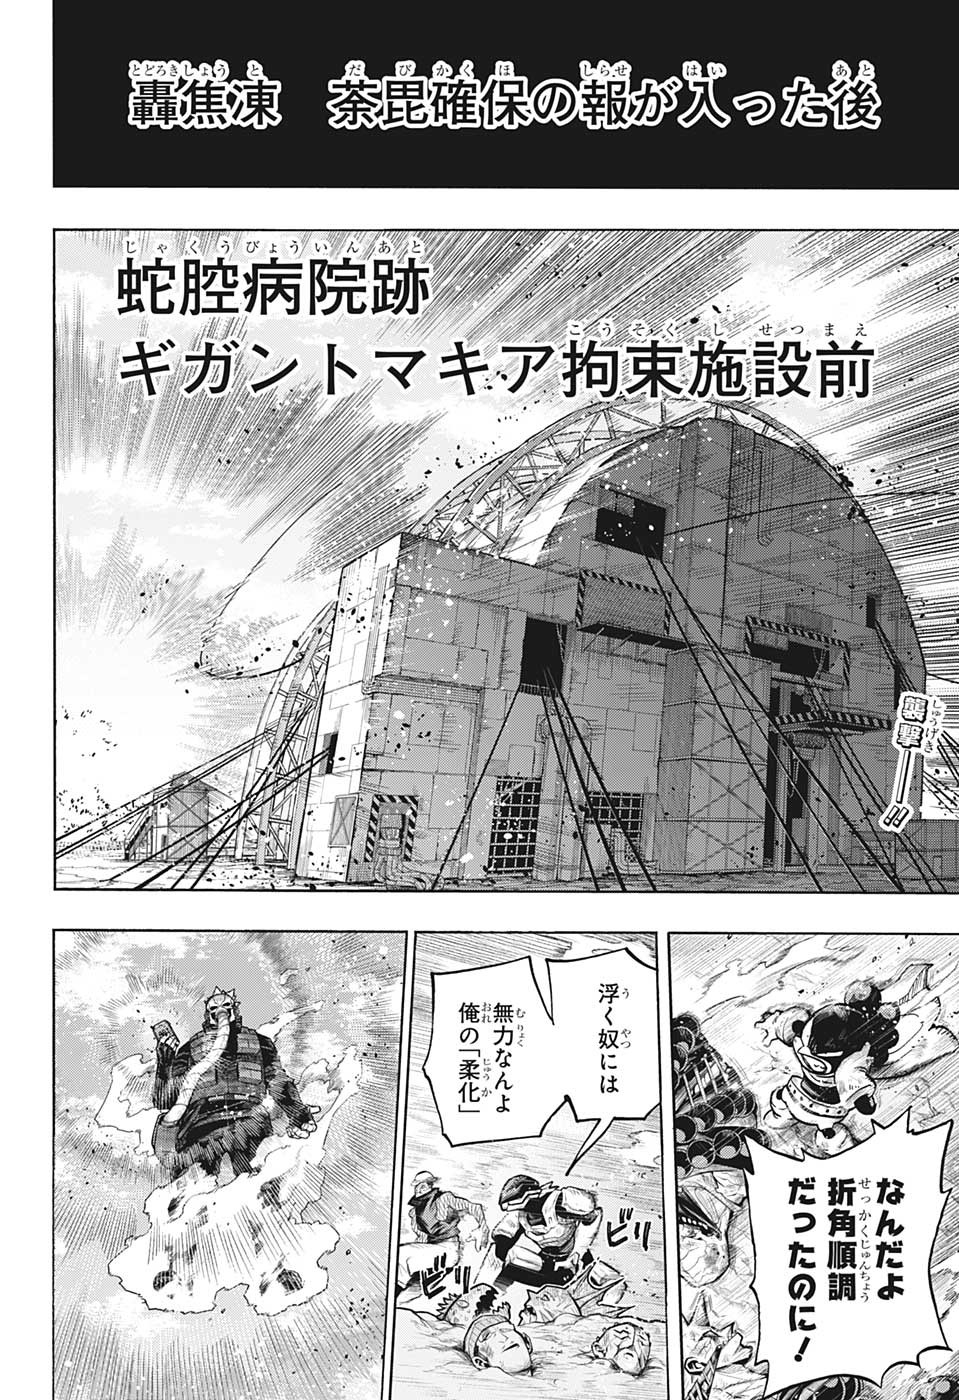 Boku no Hero Academia - Chapter 383 - Page 2